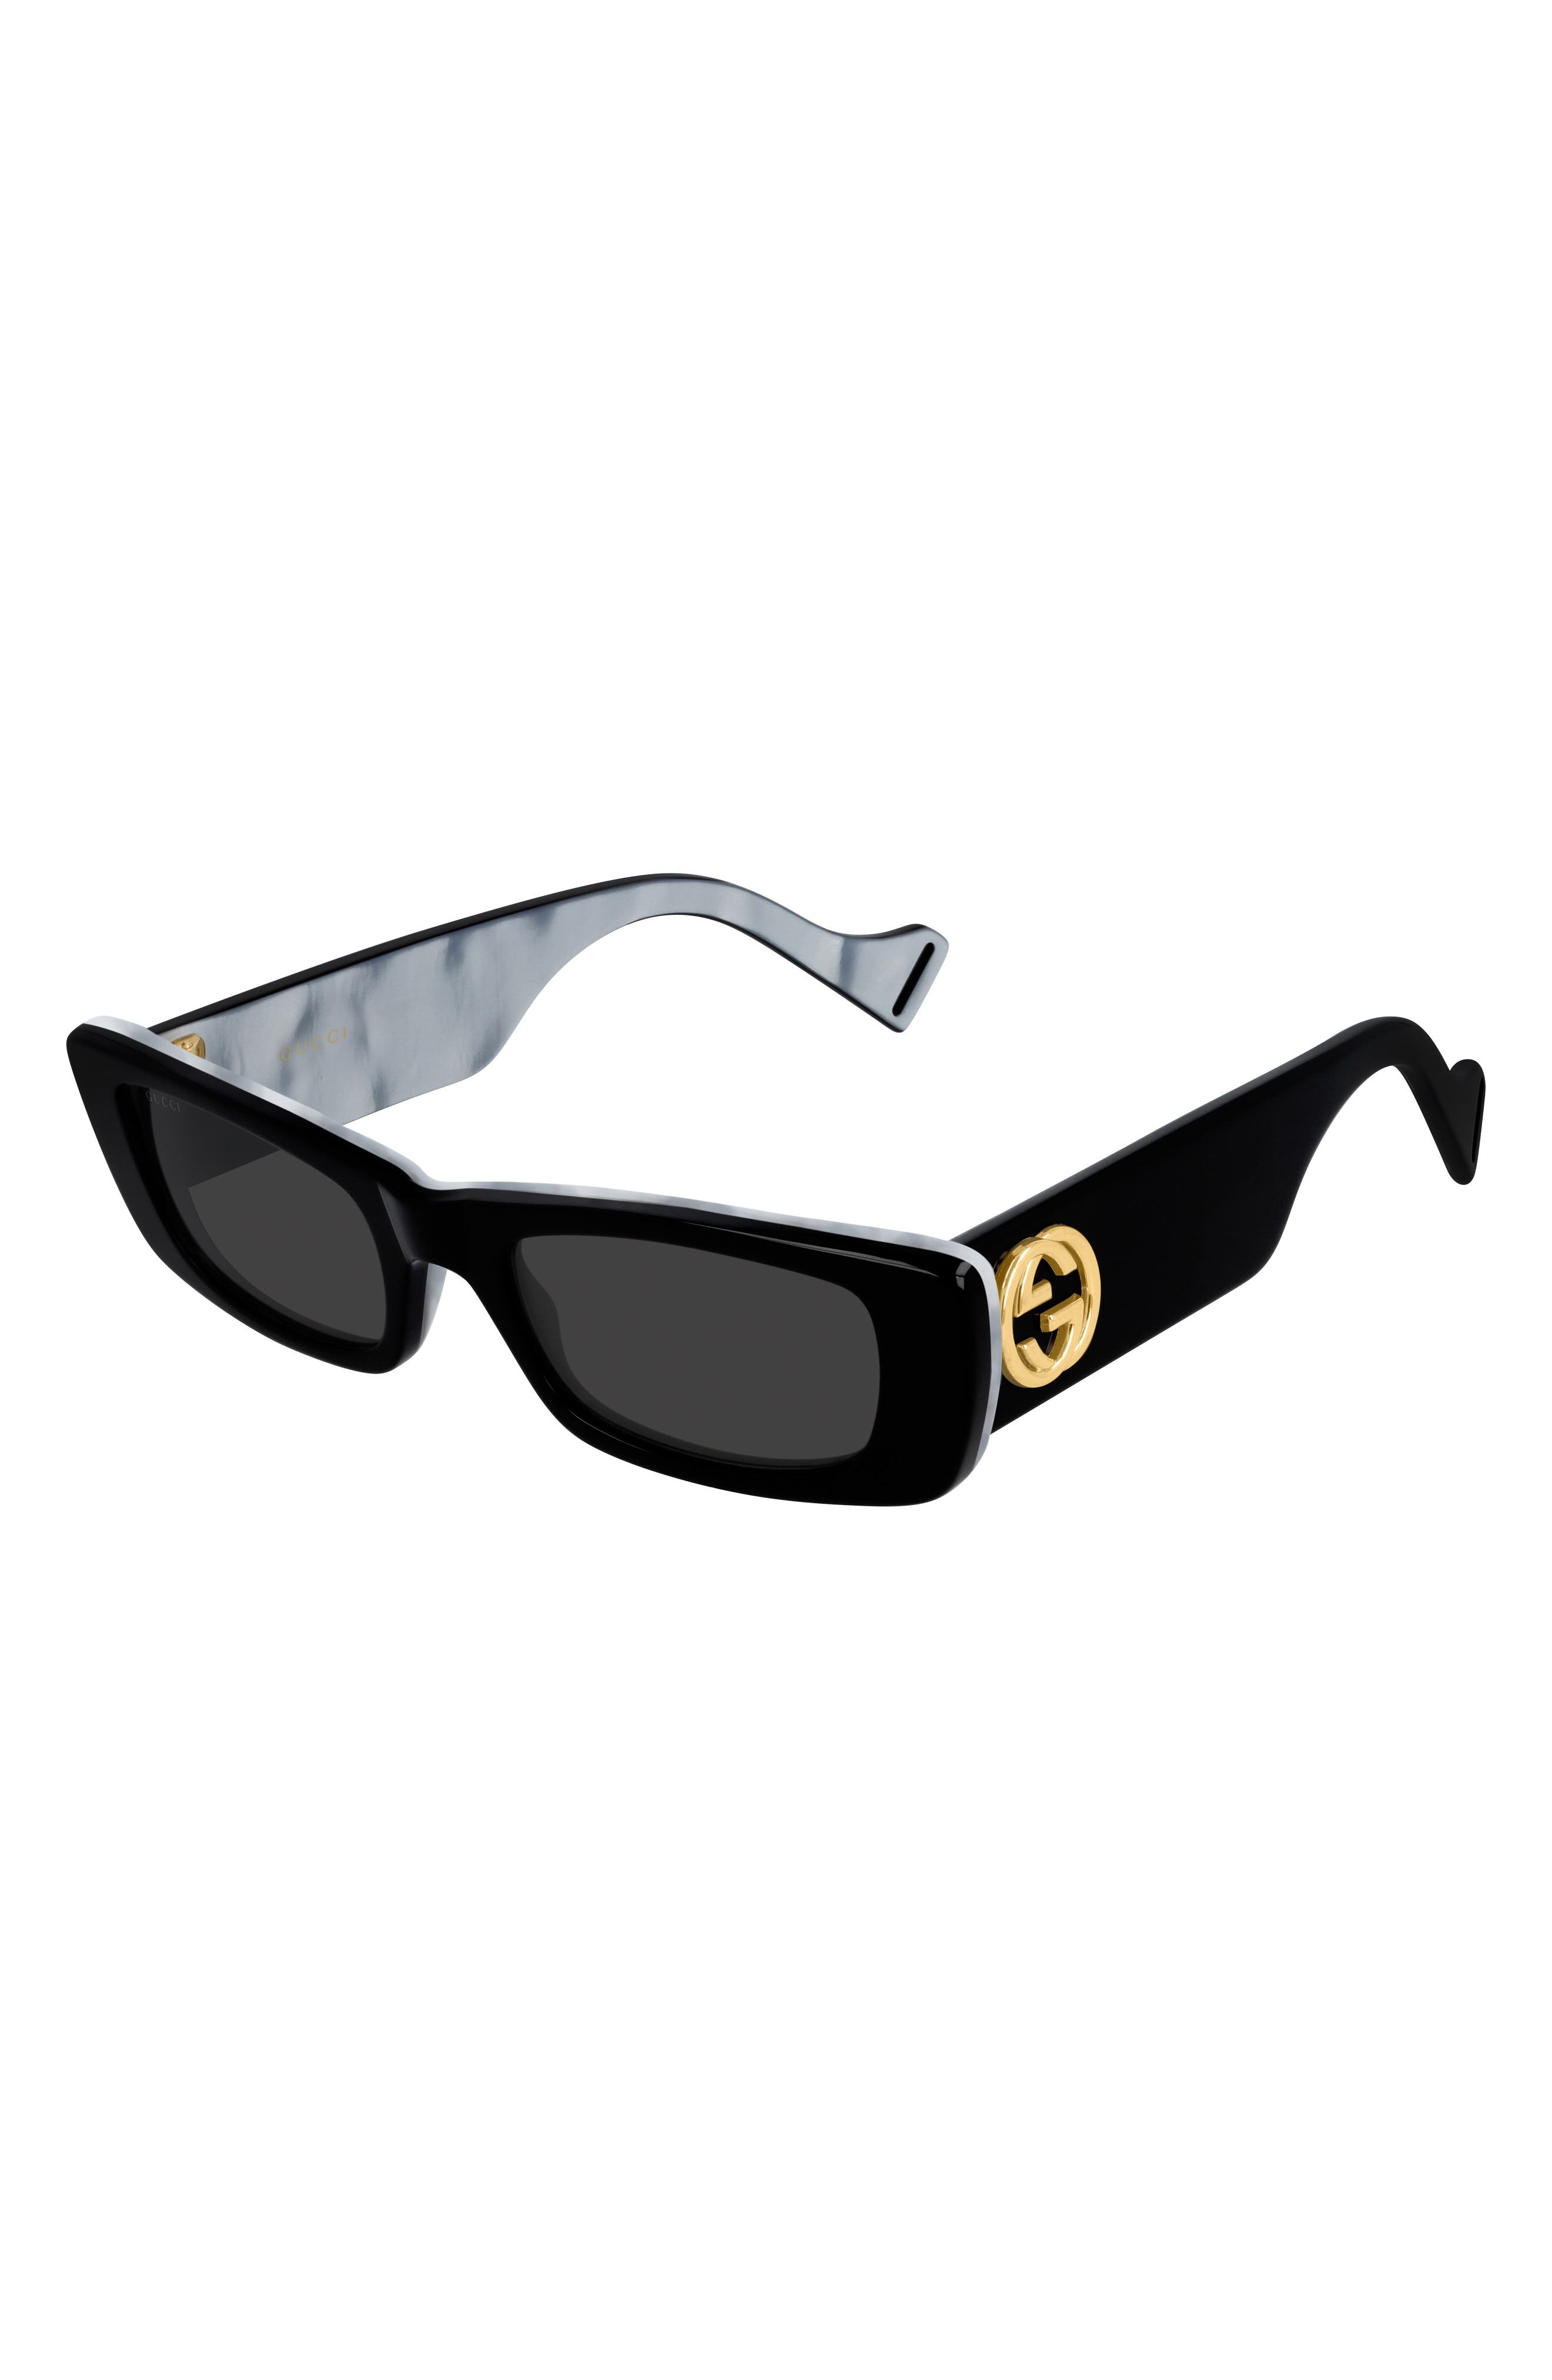 gucci women's rectangular sunglasses